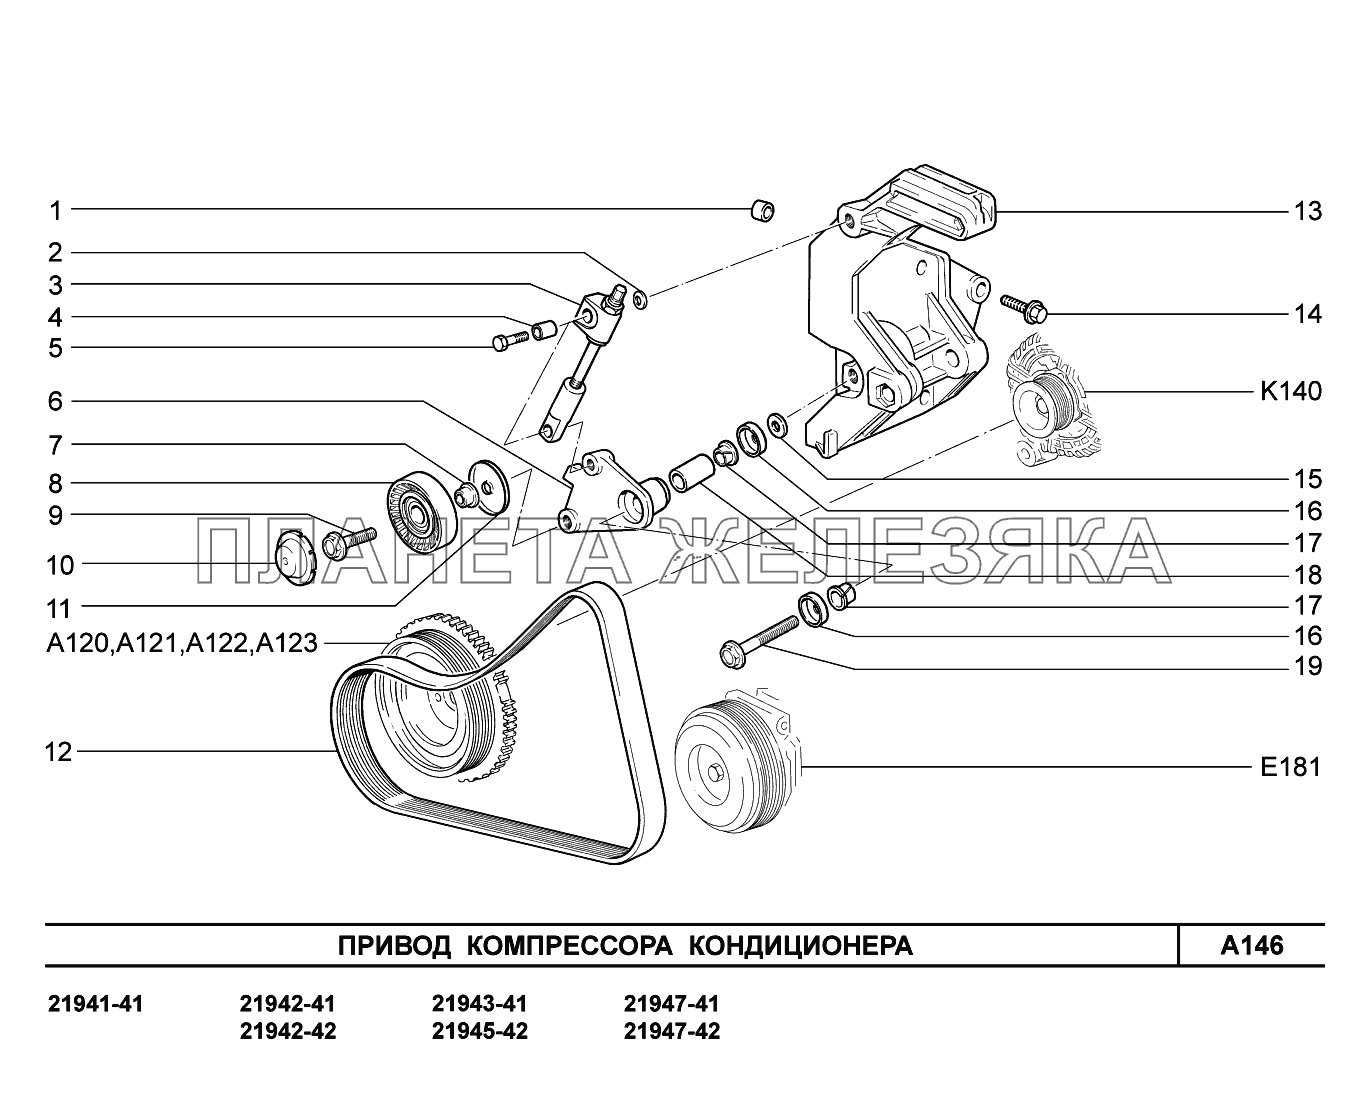 A146. Привод компрессора кондиционера Lada Kalina New 2194